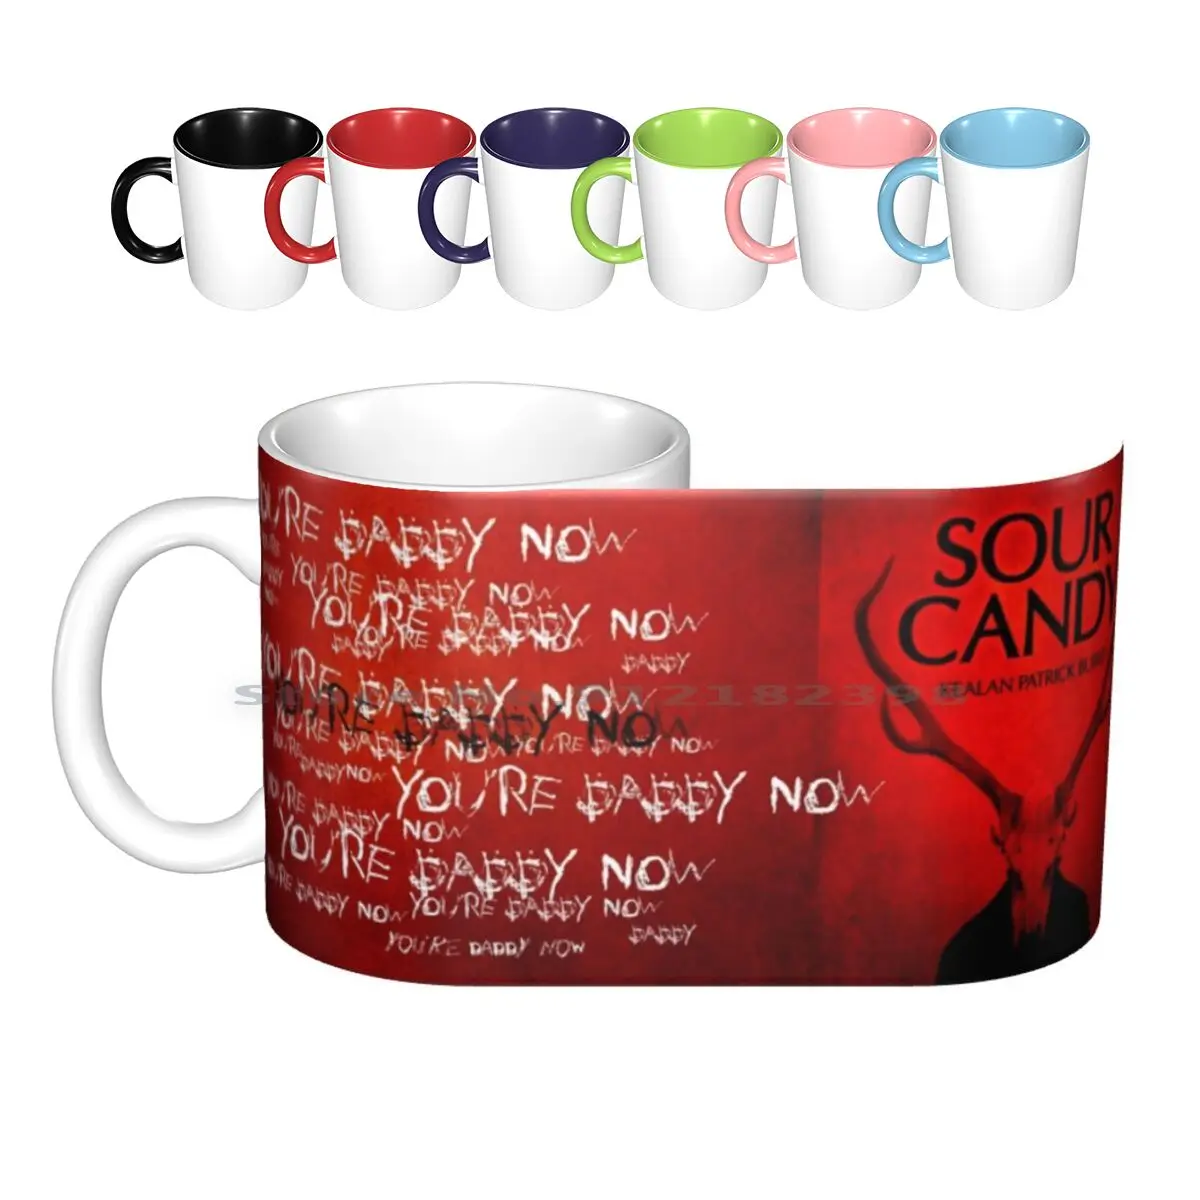 

Sour Candy-Mug #1 Ceramic Mugs Coffee Cups Milk Tea Mug Horror Monster Literary Kealanpatrickburke Creepy Creative Trending